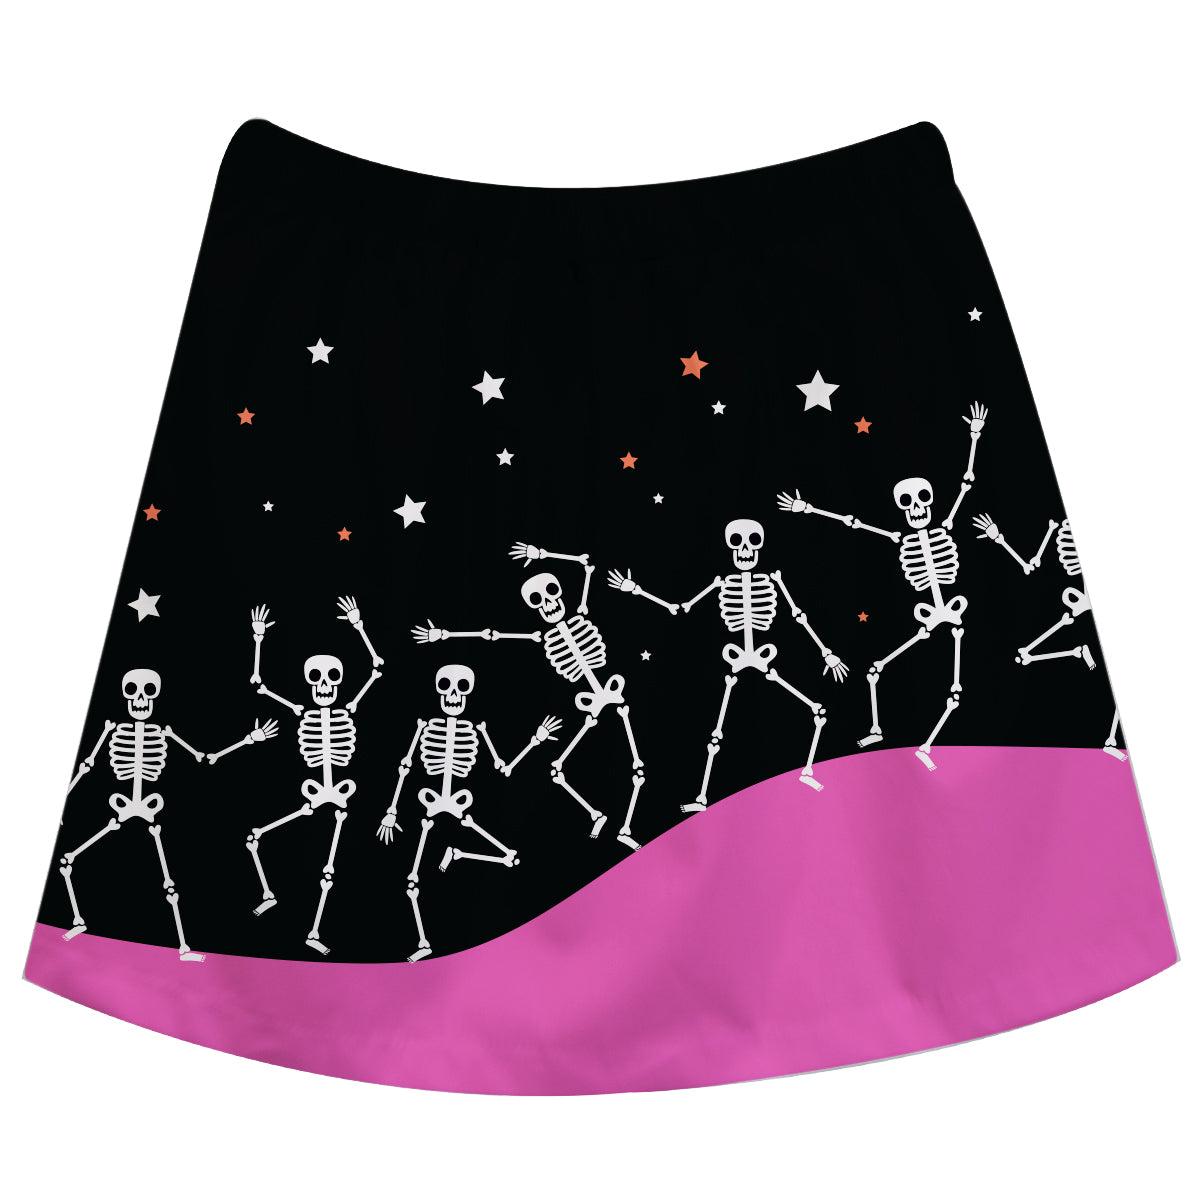 Skeletons Dancing Black and Pinkt Skirt